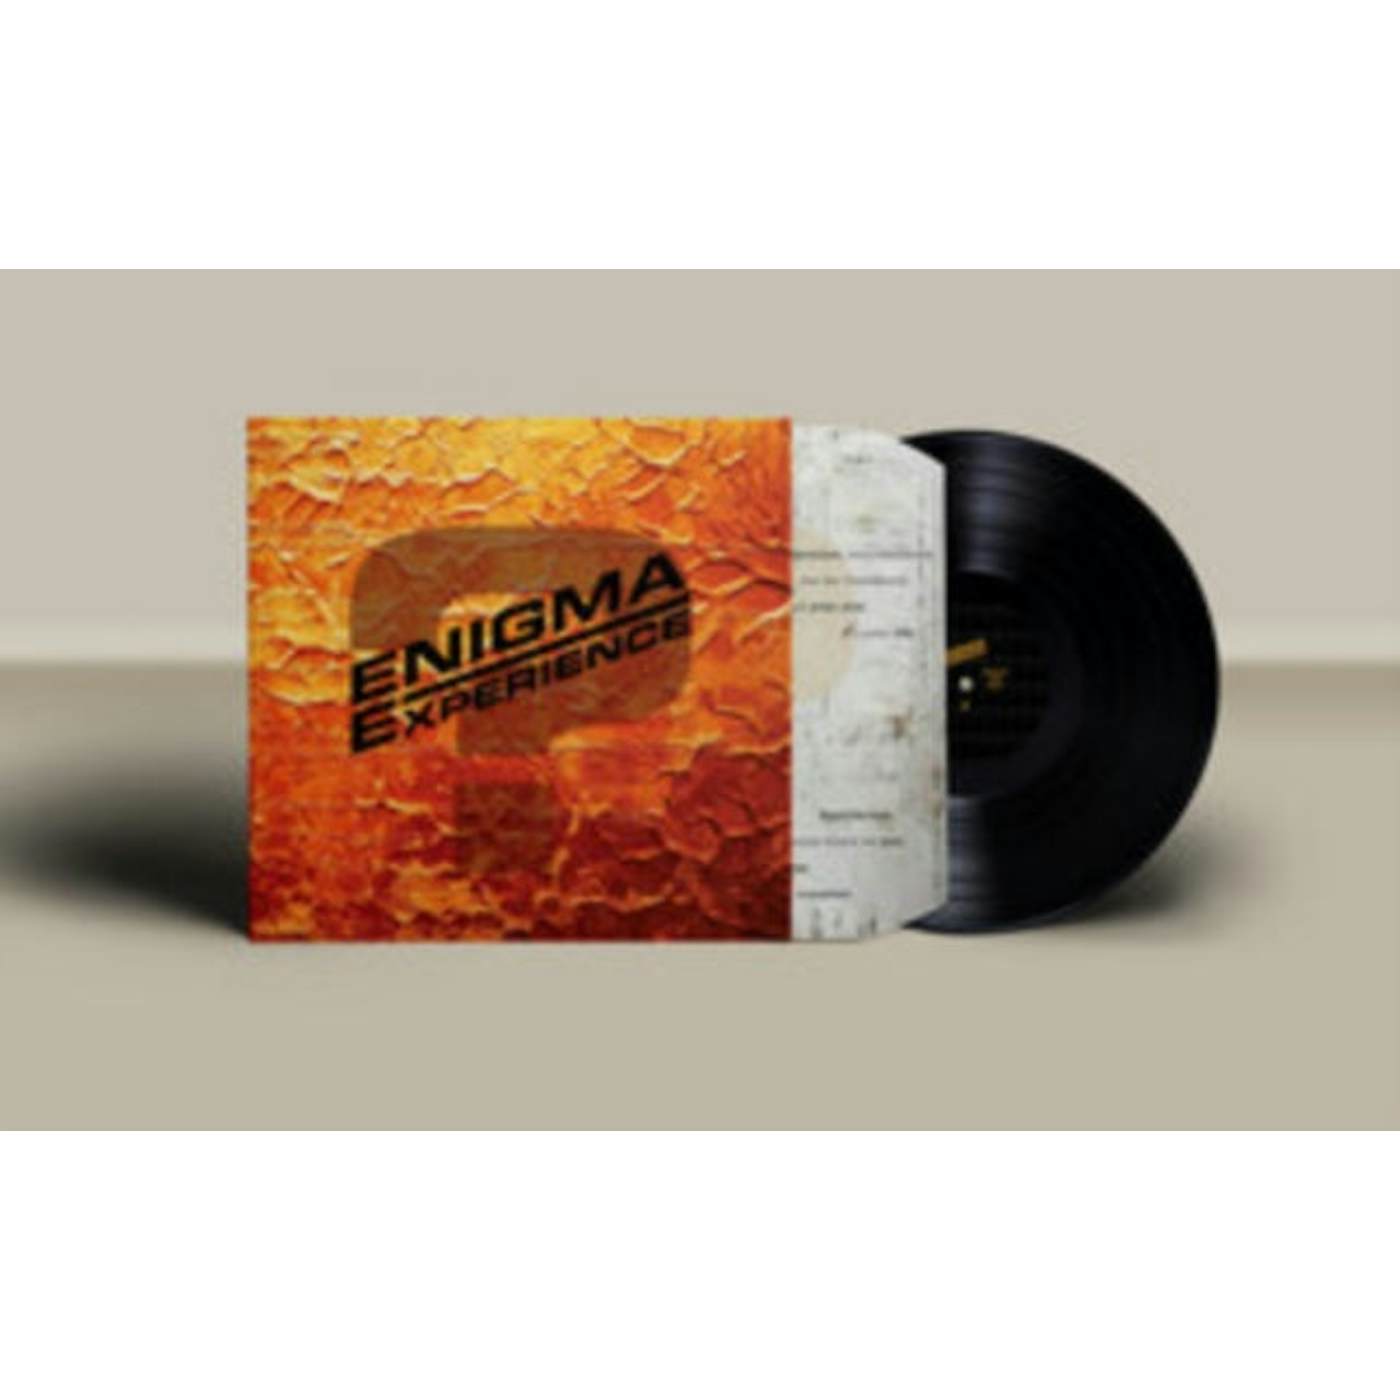 Enigma Experience LP - Question Mark (Vinyl)